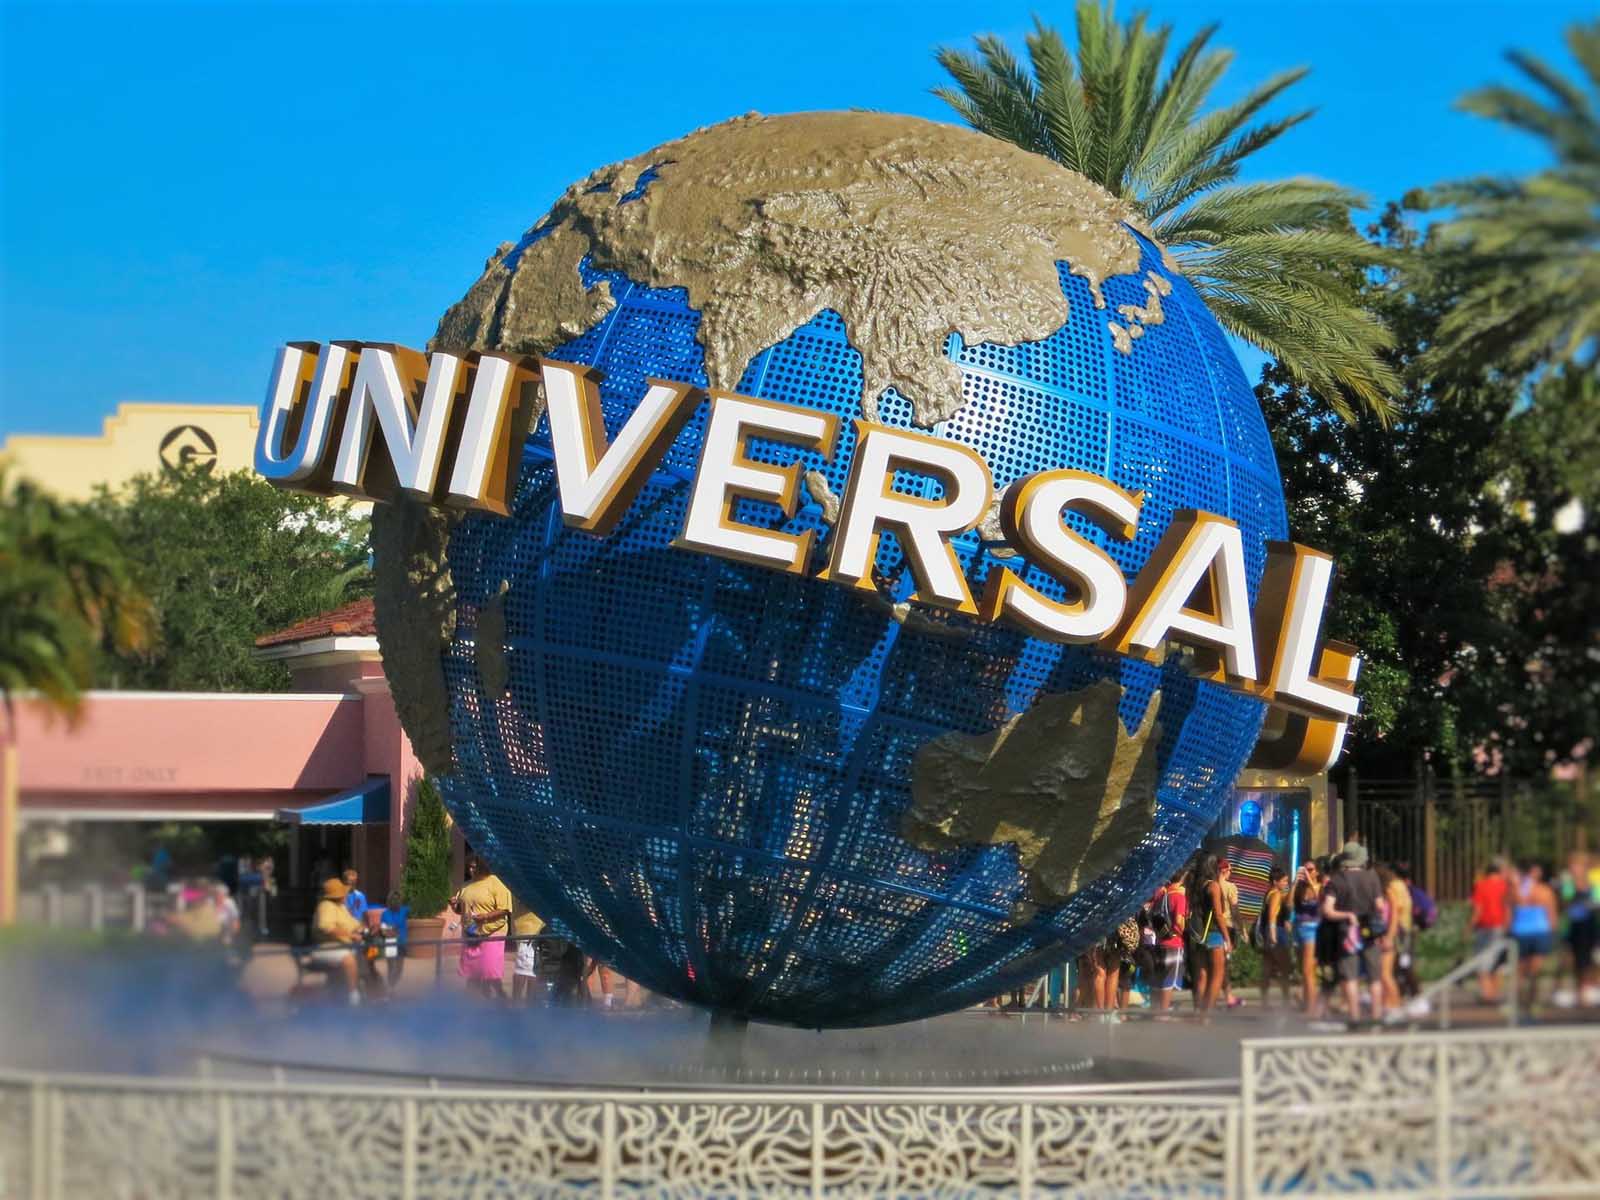 8 Best Theme Parks in Orlando, Florida